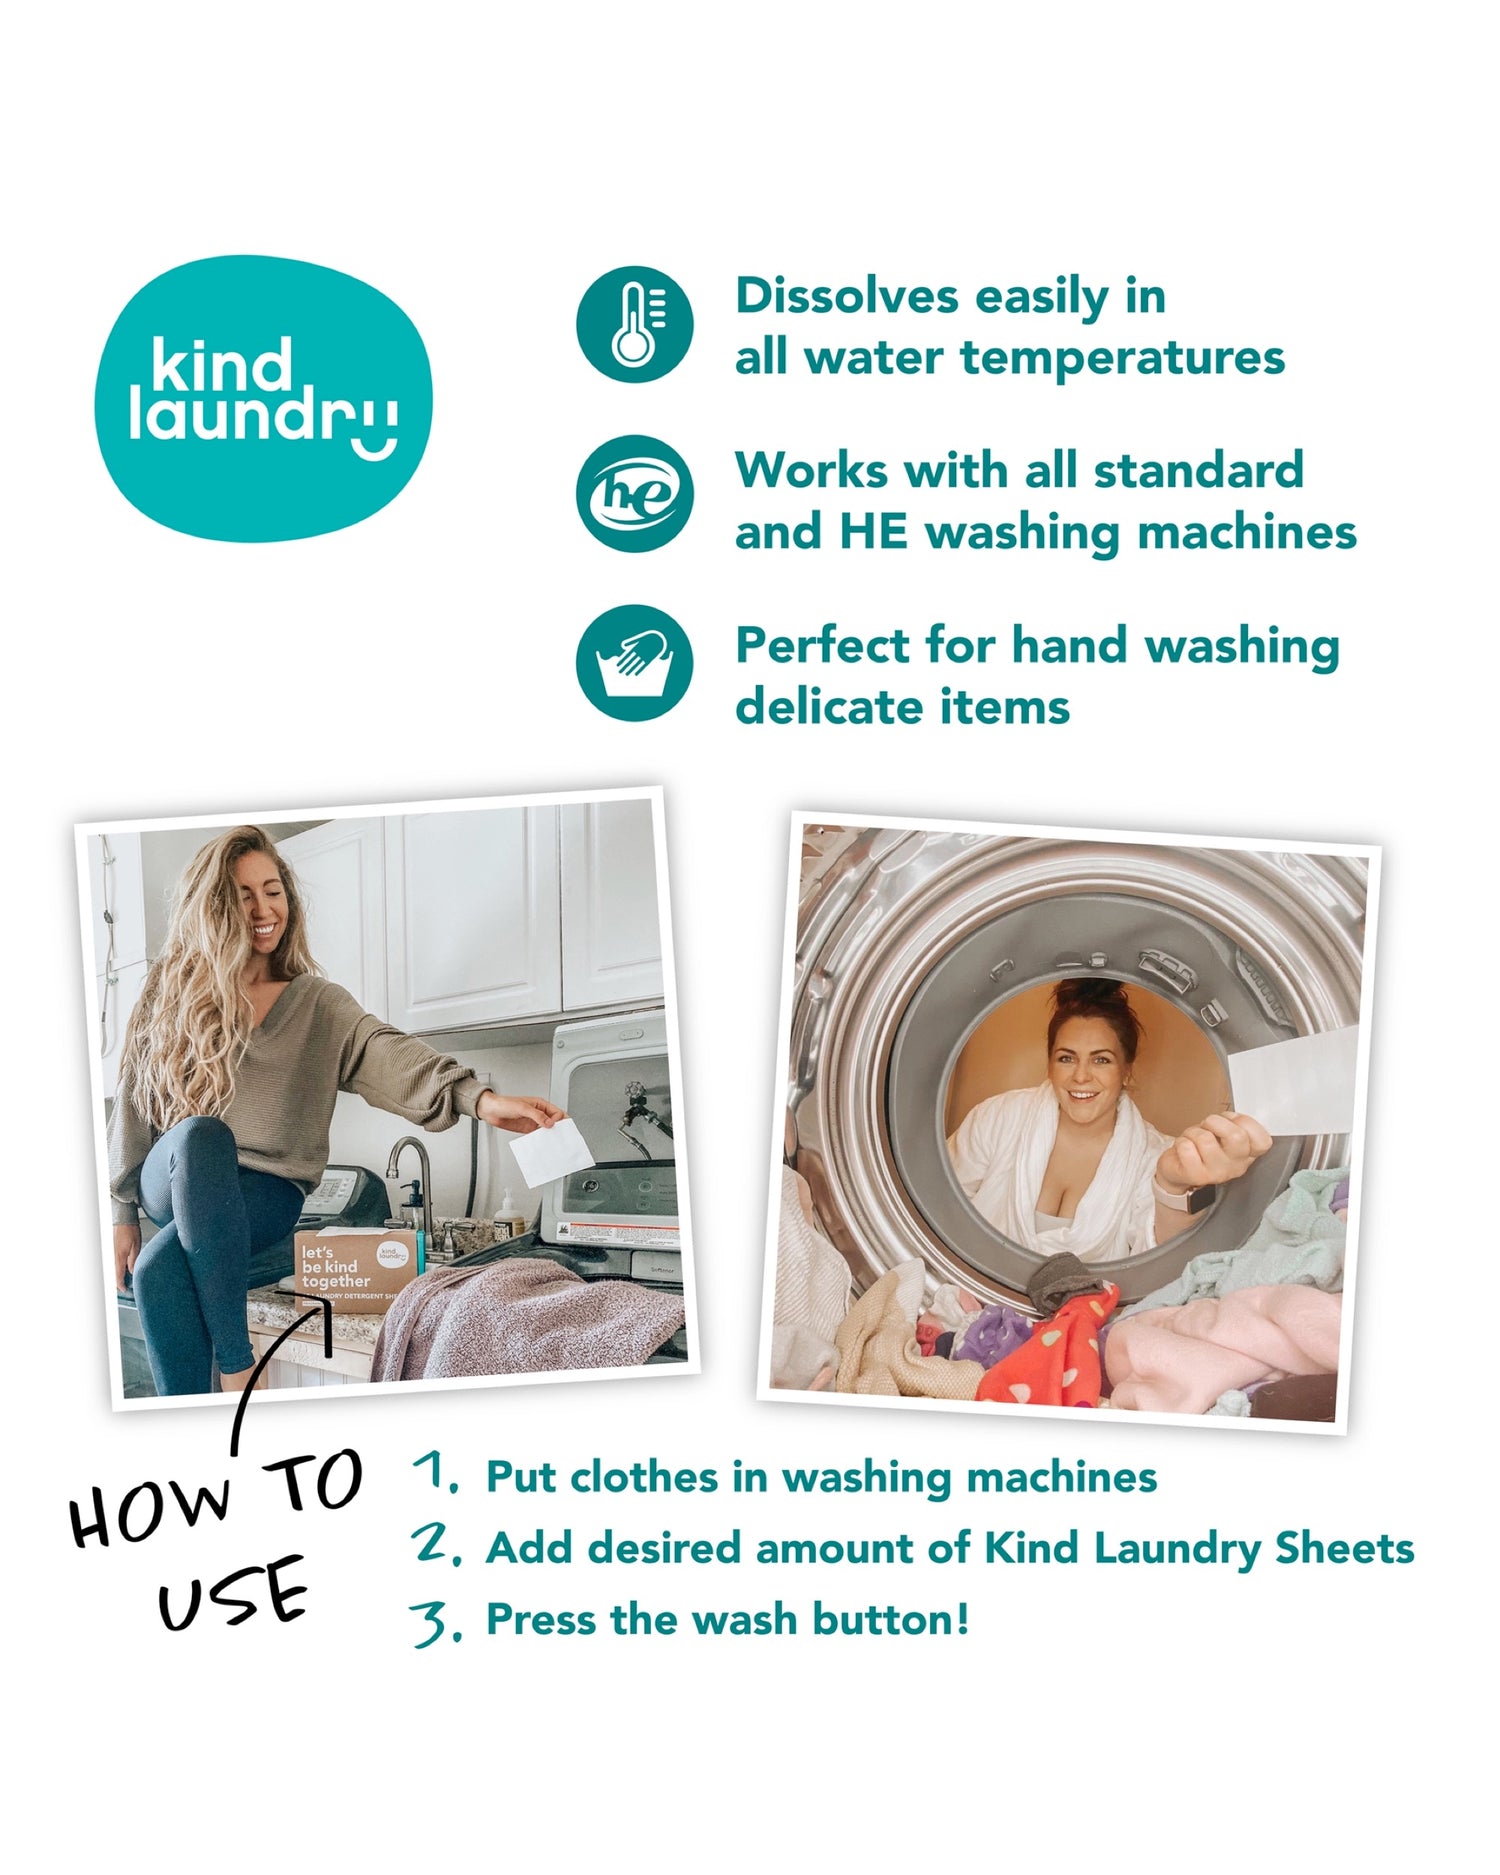 Zero Waste Laundry Detergent Sheets (Fragrance-Free)